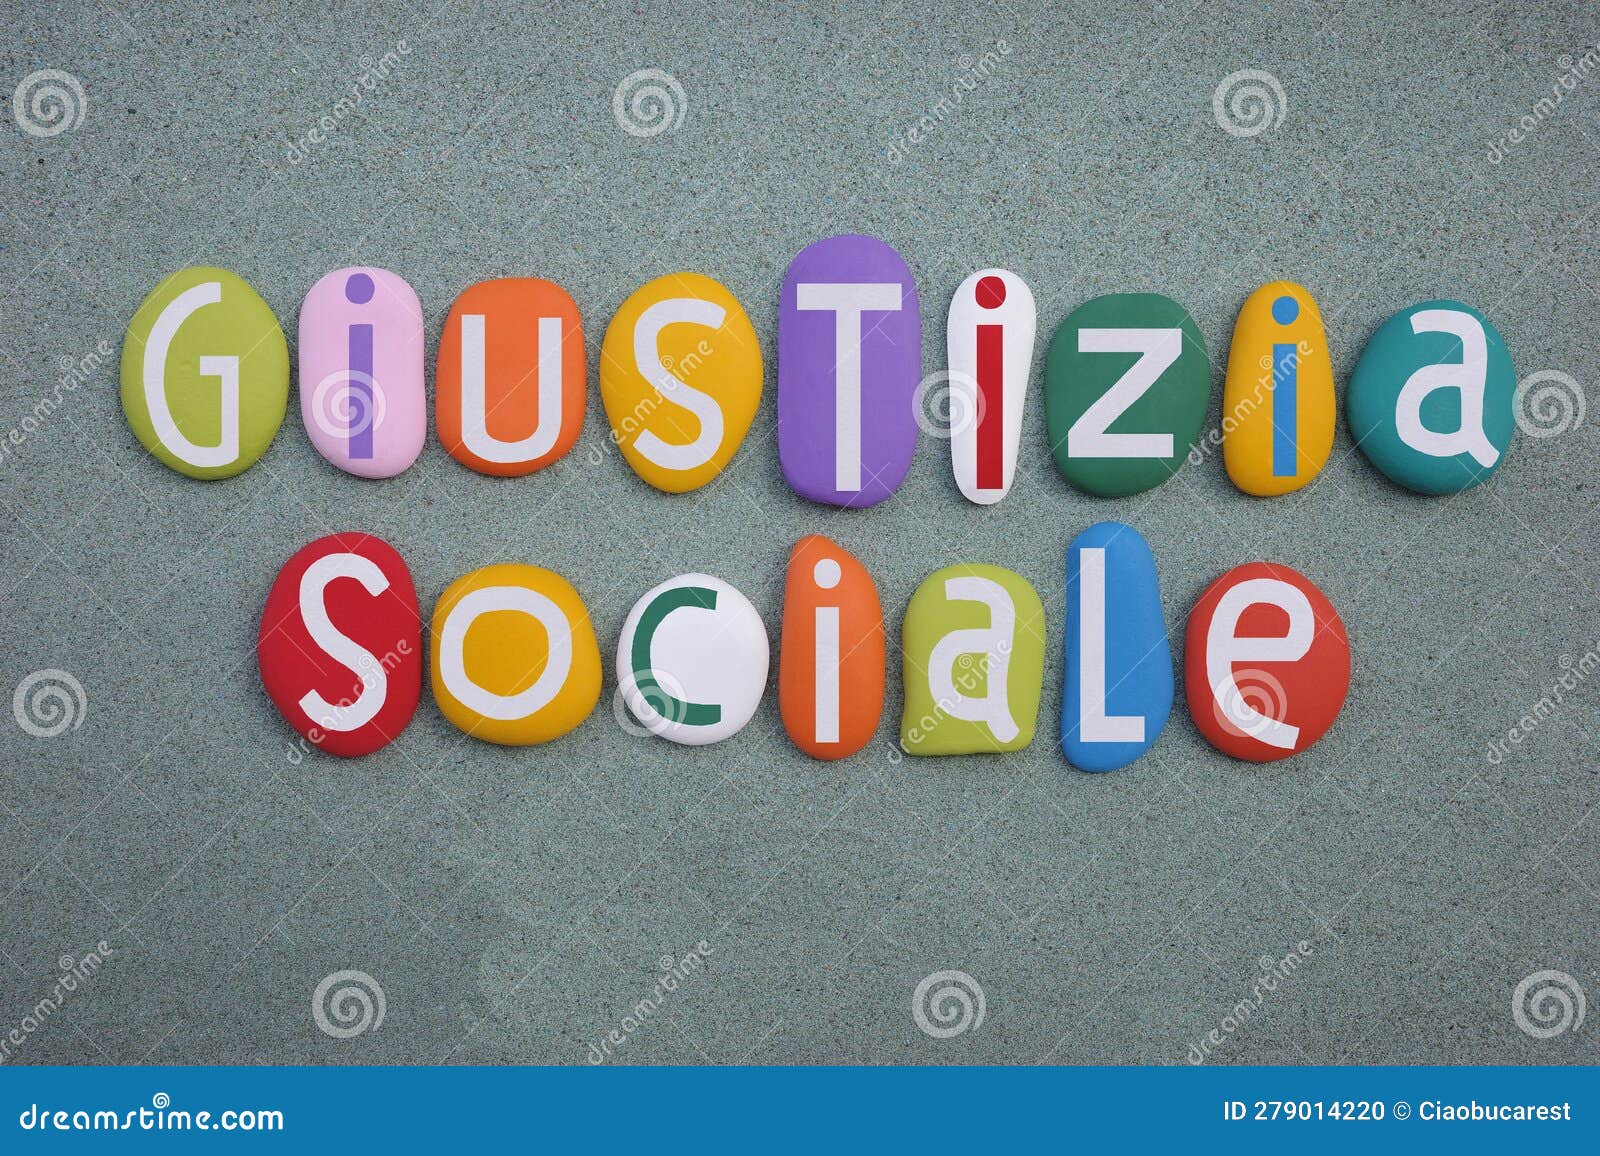 giustizia sociale, social justice in italian language composed with multi colored stone letters over green sand